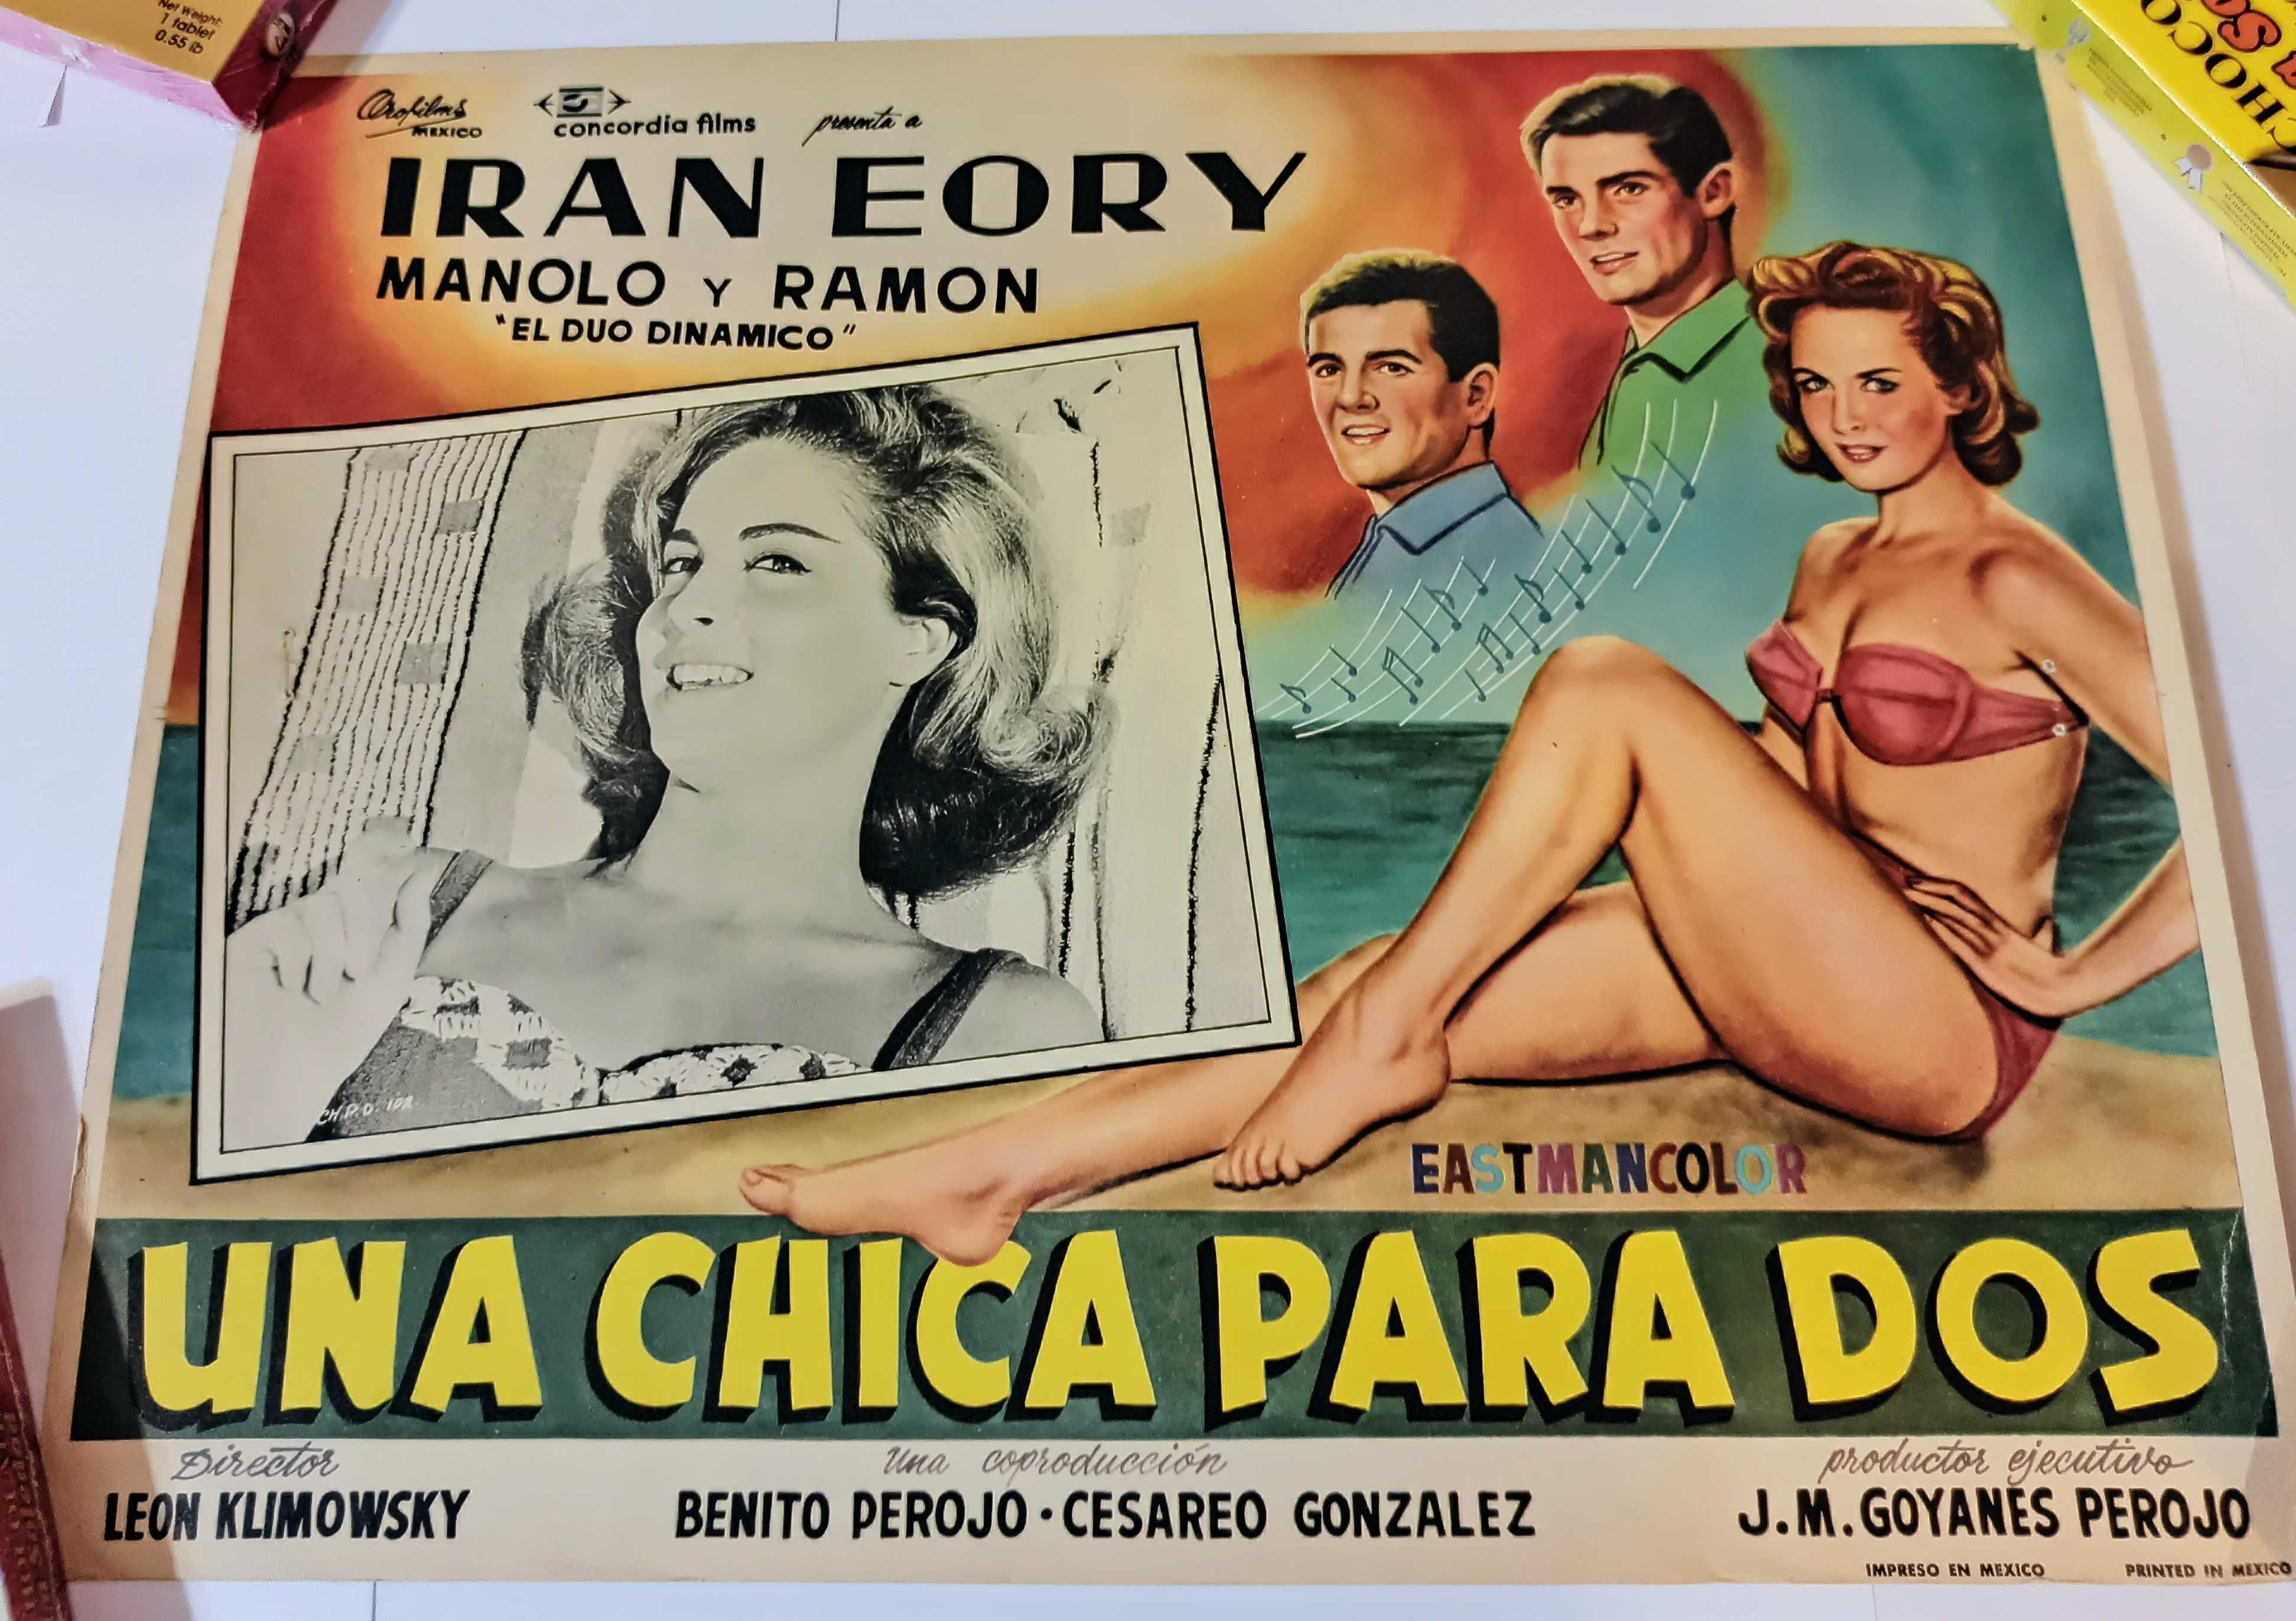 Stary oryginalny plakat z Meksyku z lat 60